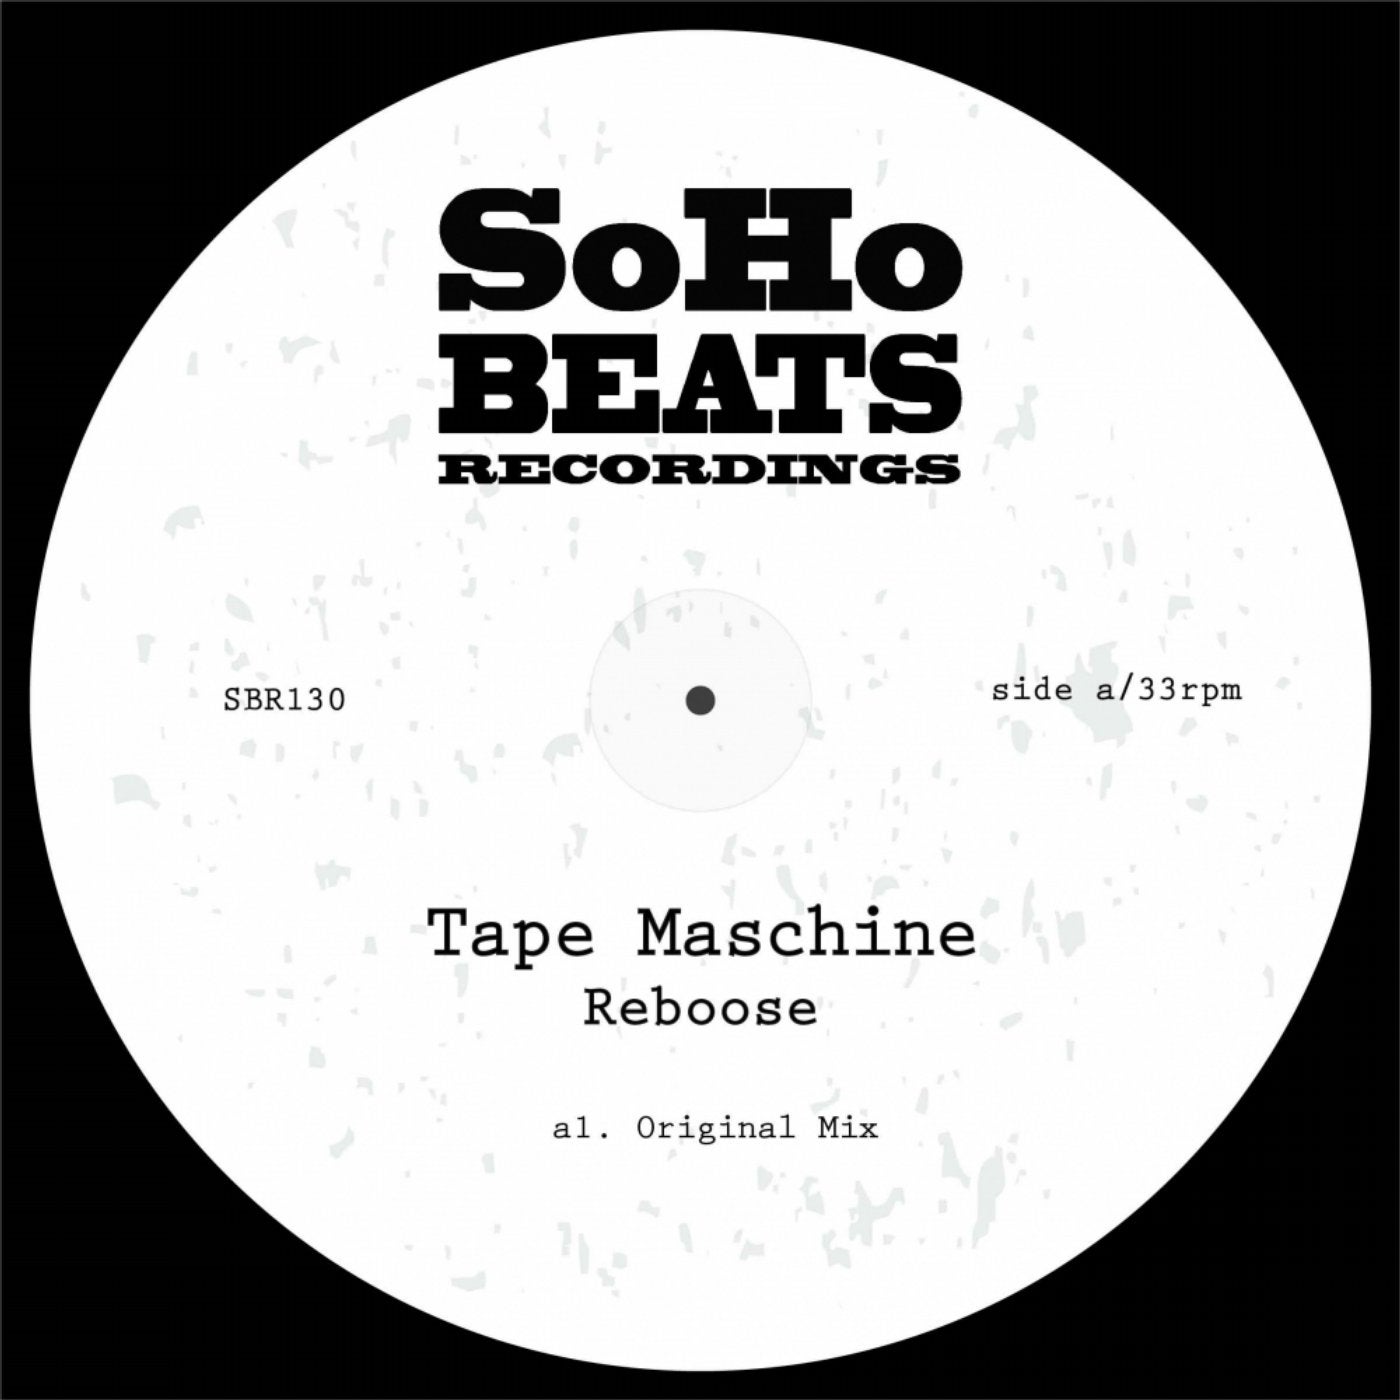 (Original Mix) by Maschine on Beatport